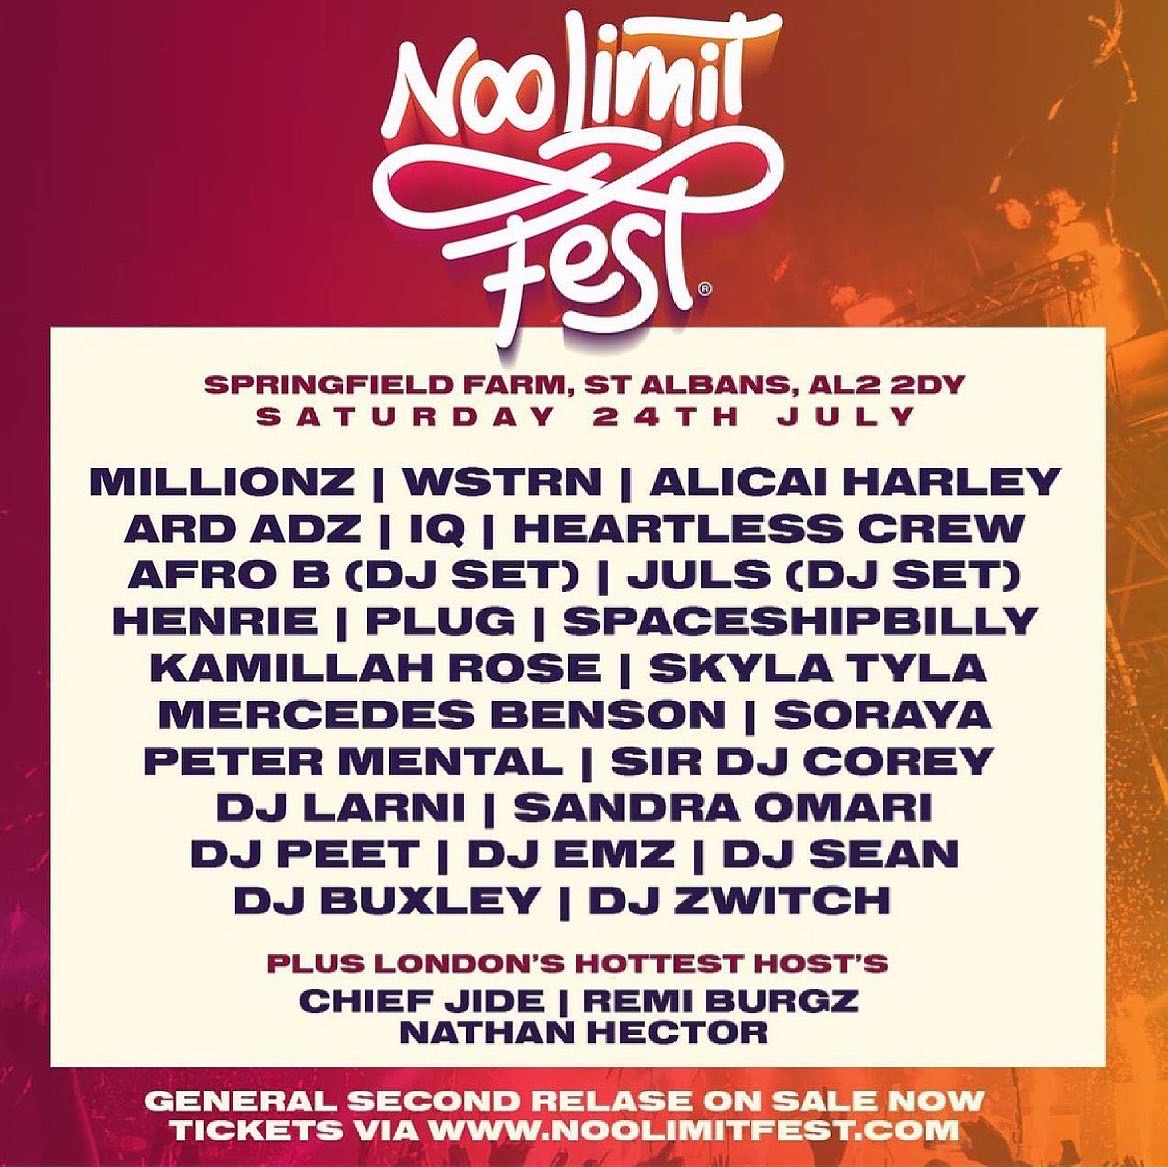 M1llionz, WSTRN, Afro B + more at  Noo Limit Festival 2021 [@Noolimitfest]